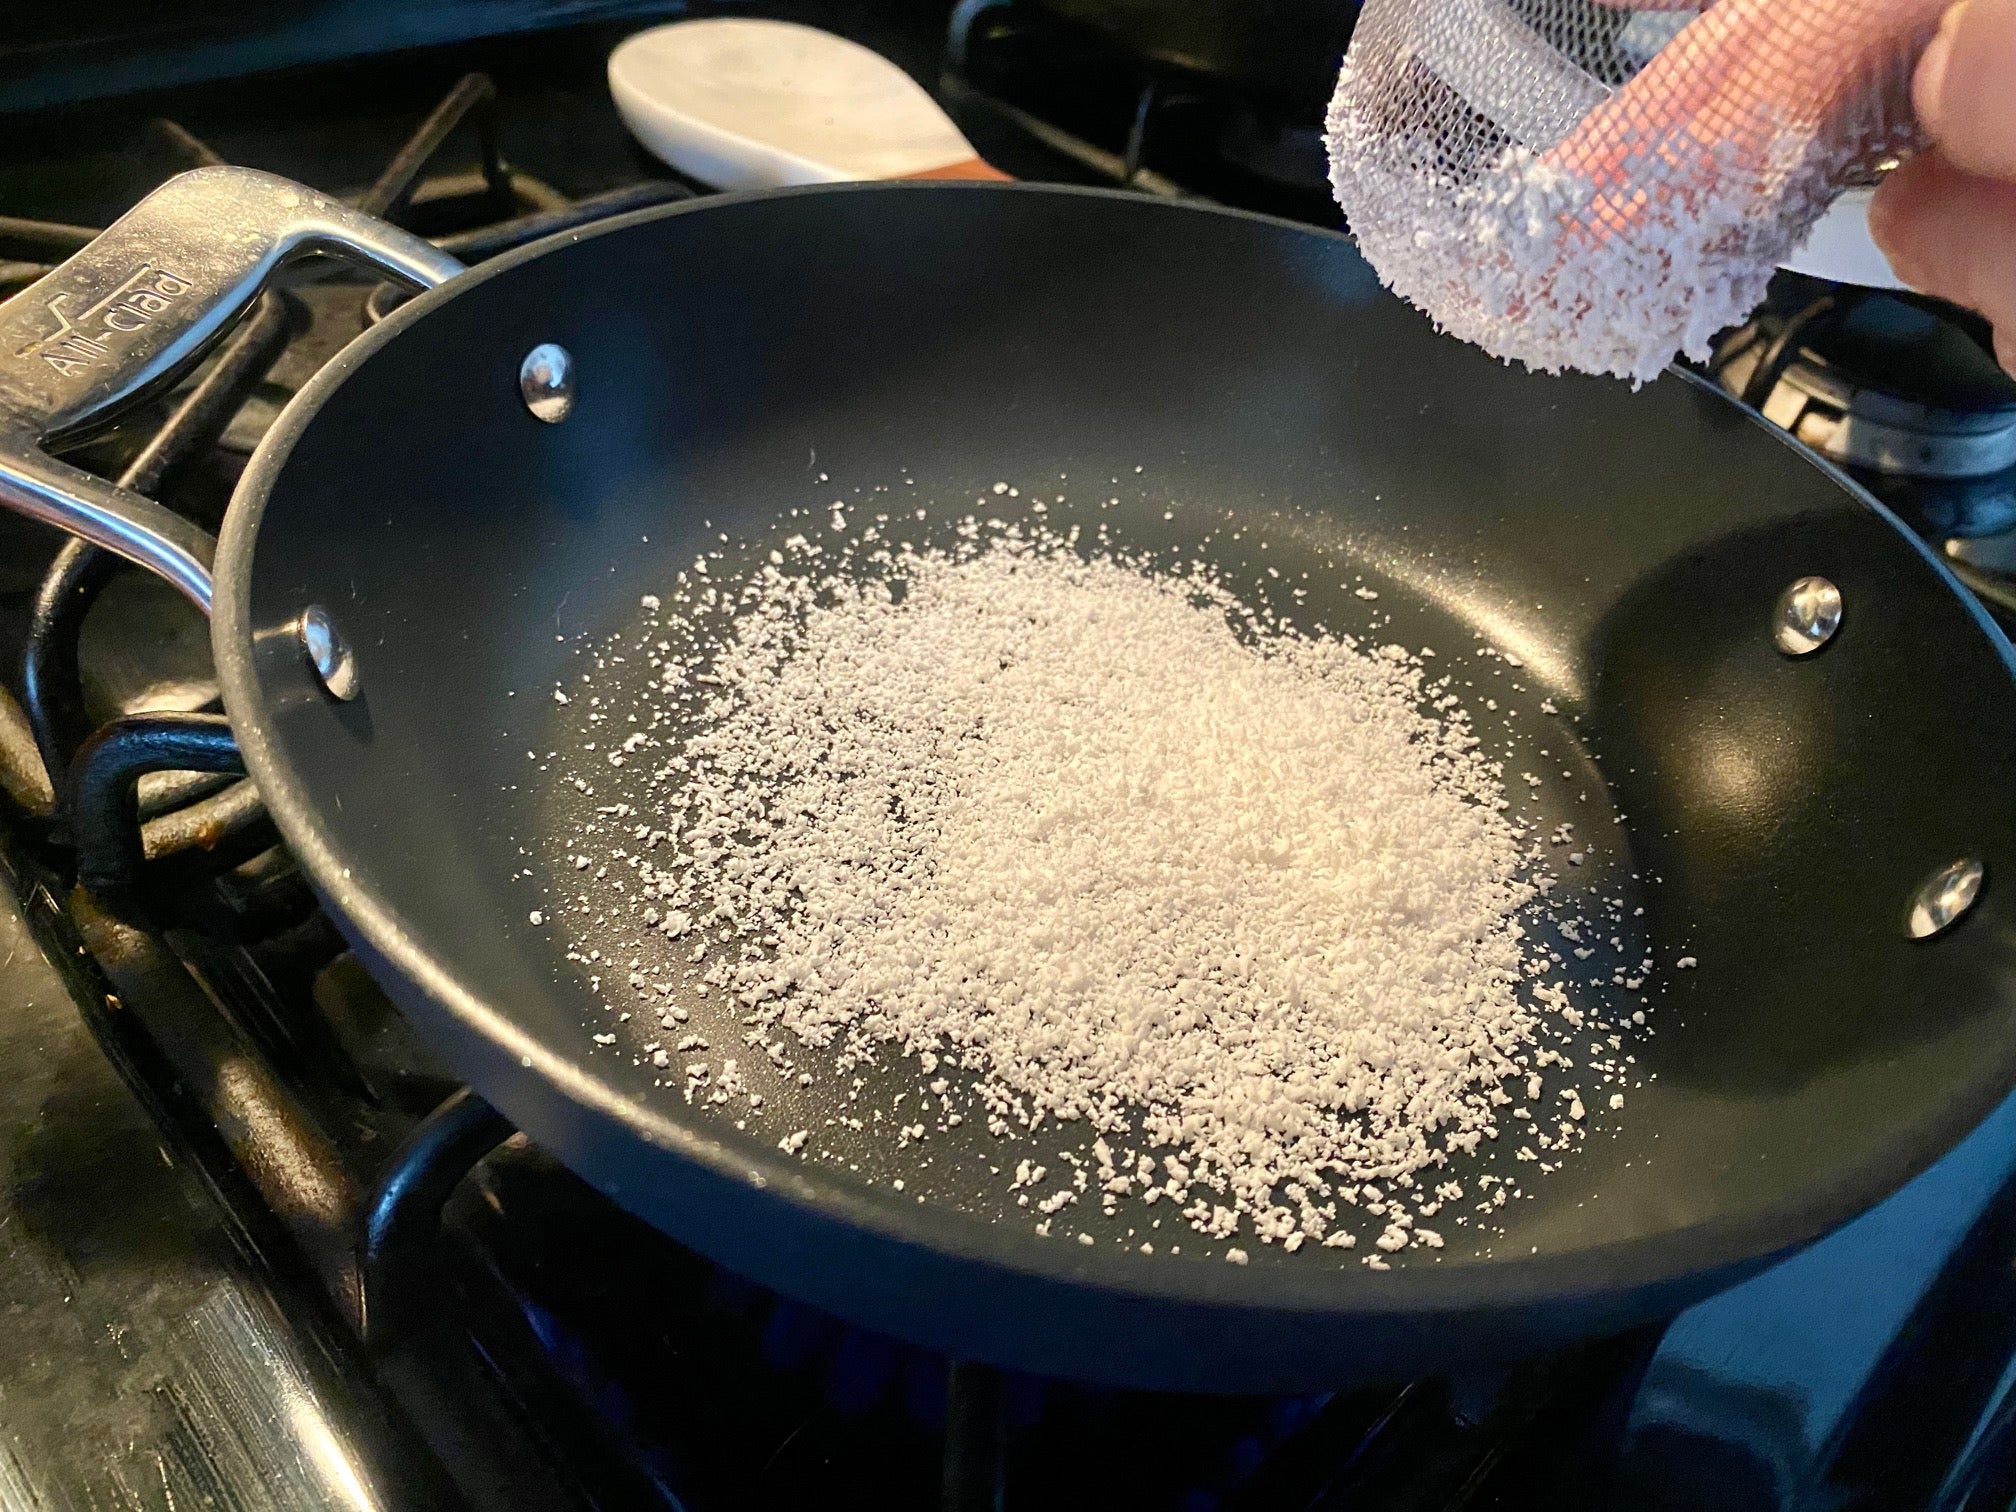 Sieving tapioca into a hot pan. (Photo: Allie Chanthorn Reinmann)